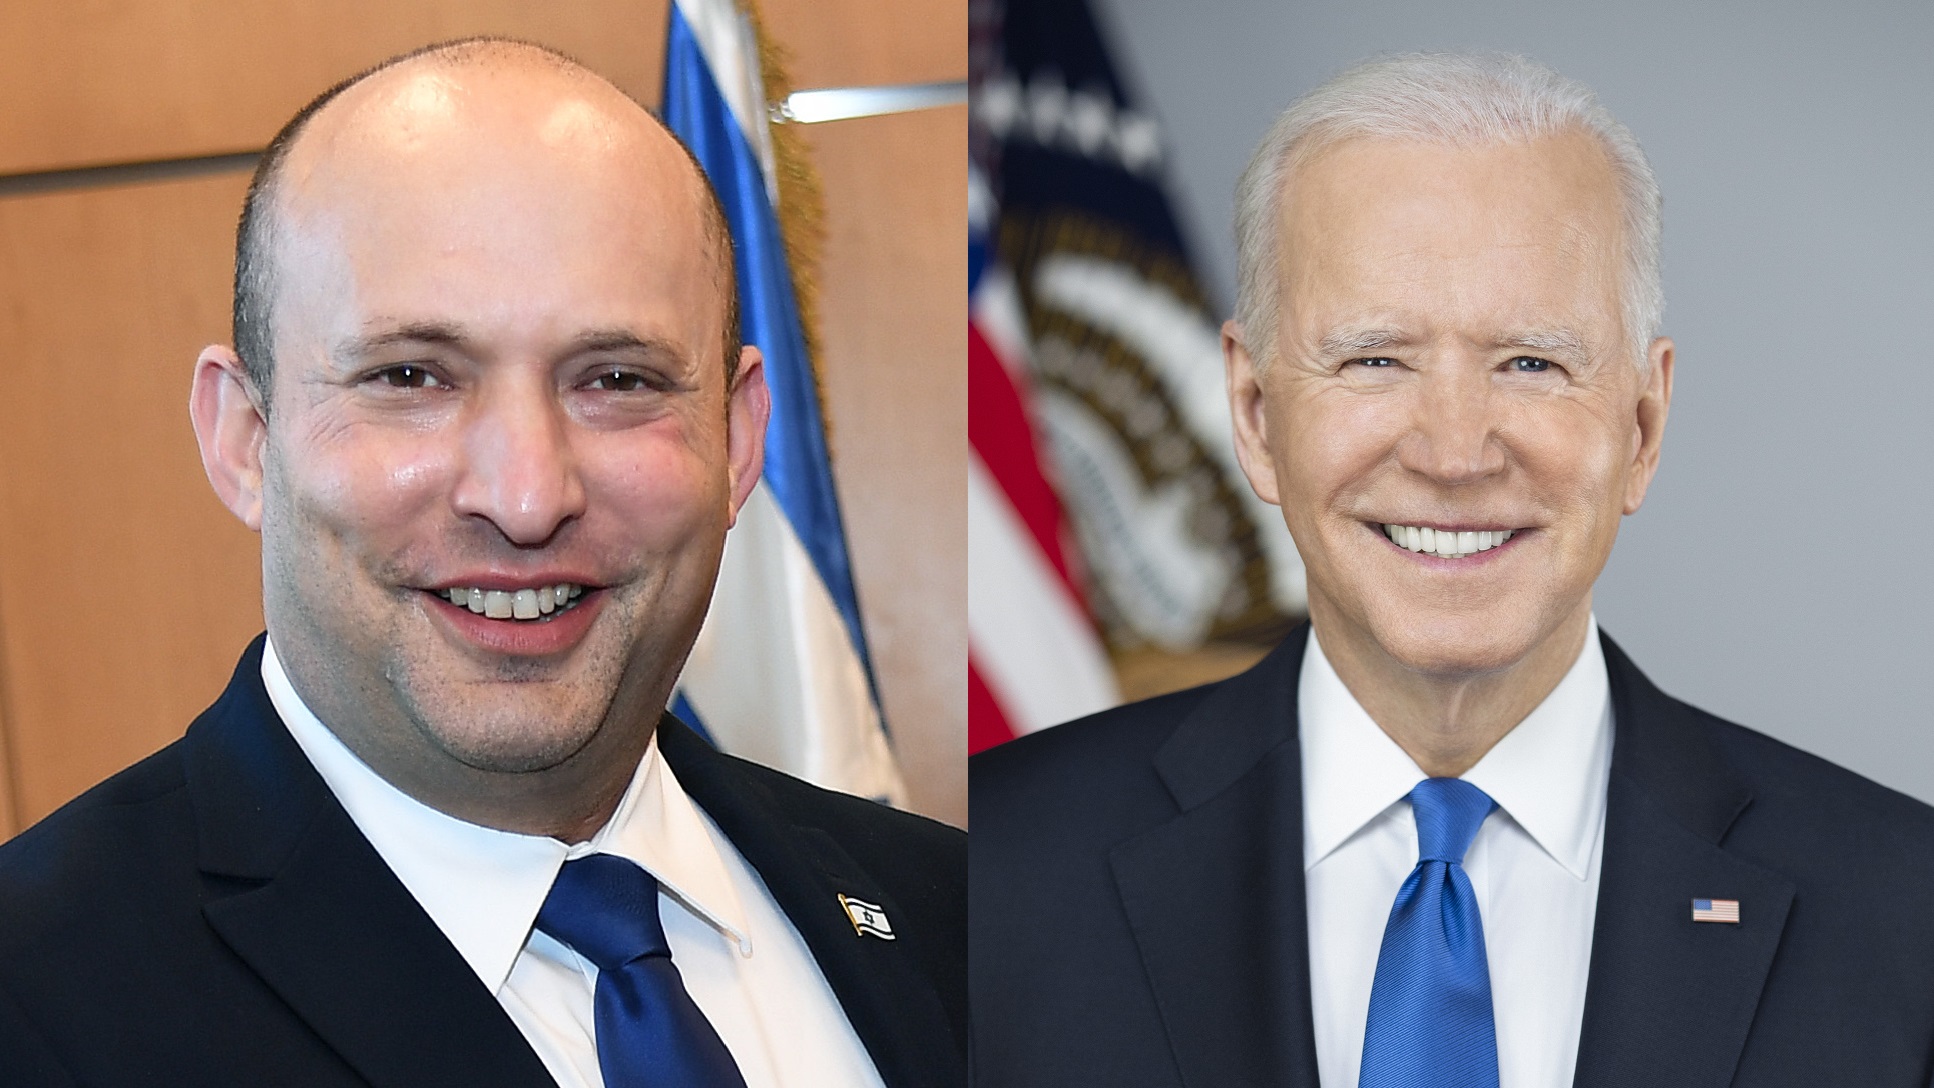 Biden Offers Condolences Over Terror Attacks in Call With Bennett